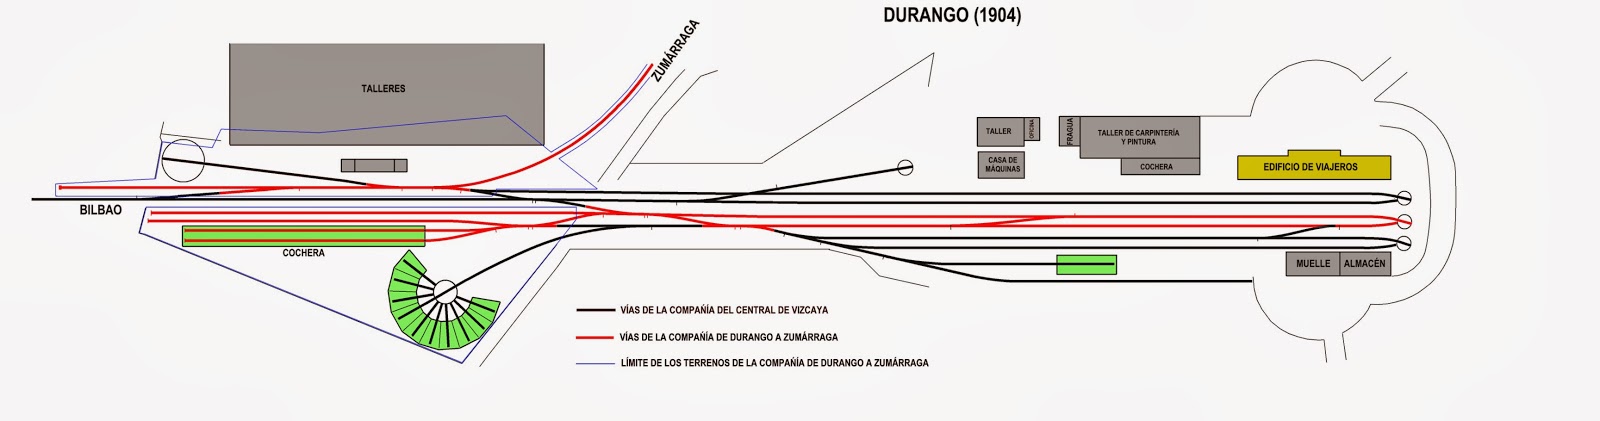 Instalaciones de Durango , dibujo Pedro Pintado Quintana